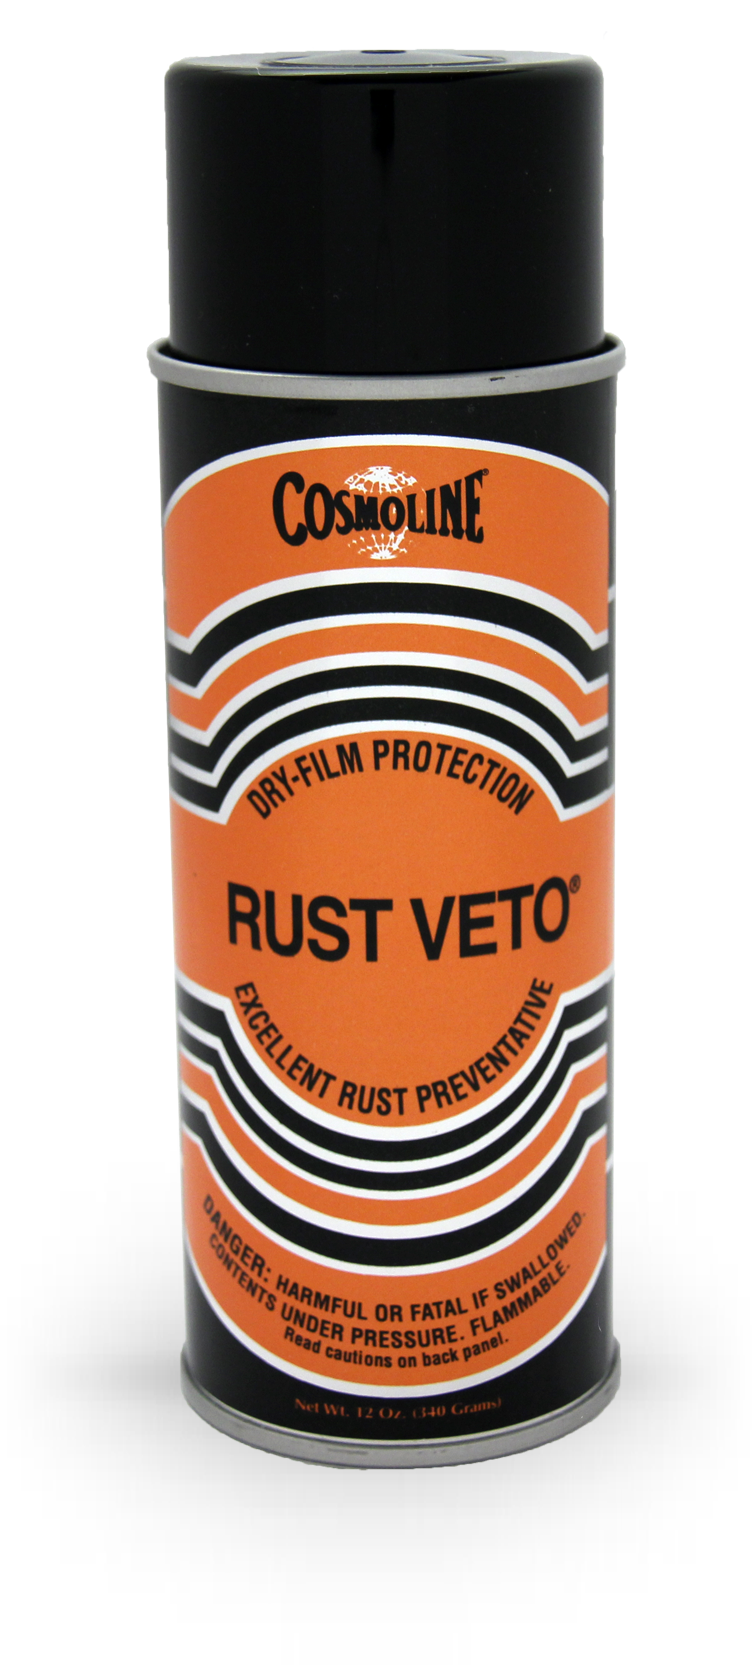 Cosmoline Product Rust Veto